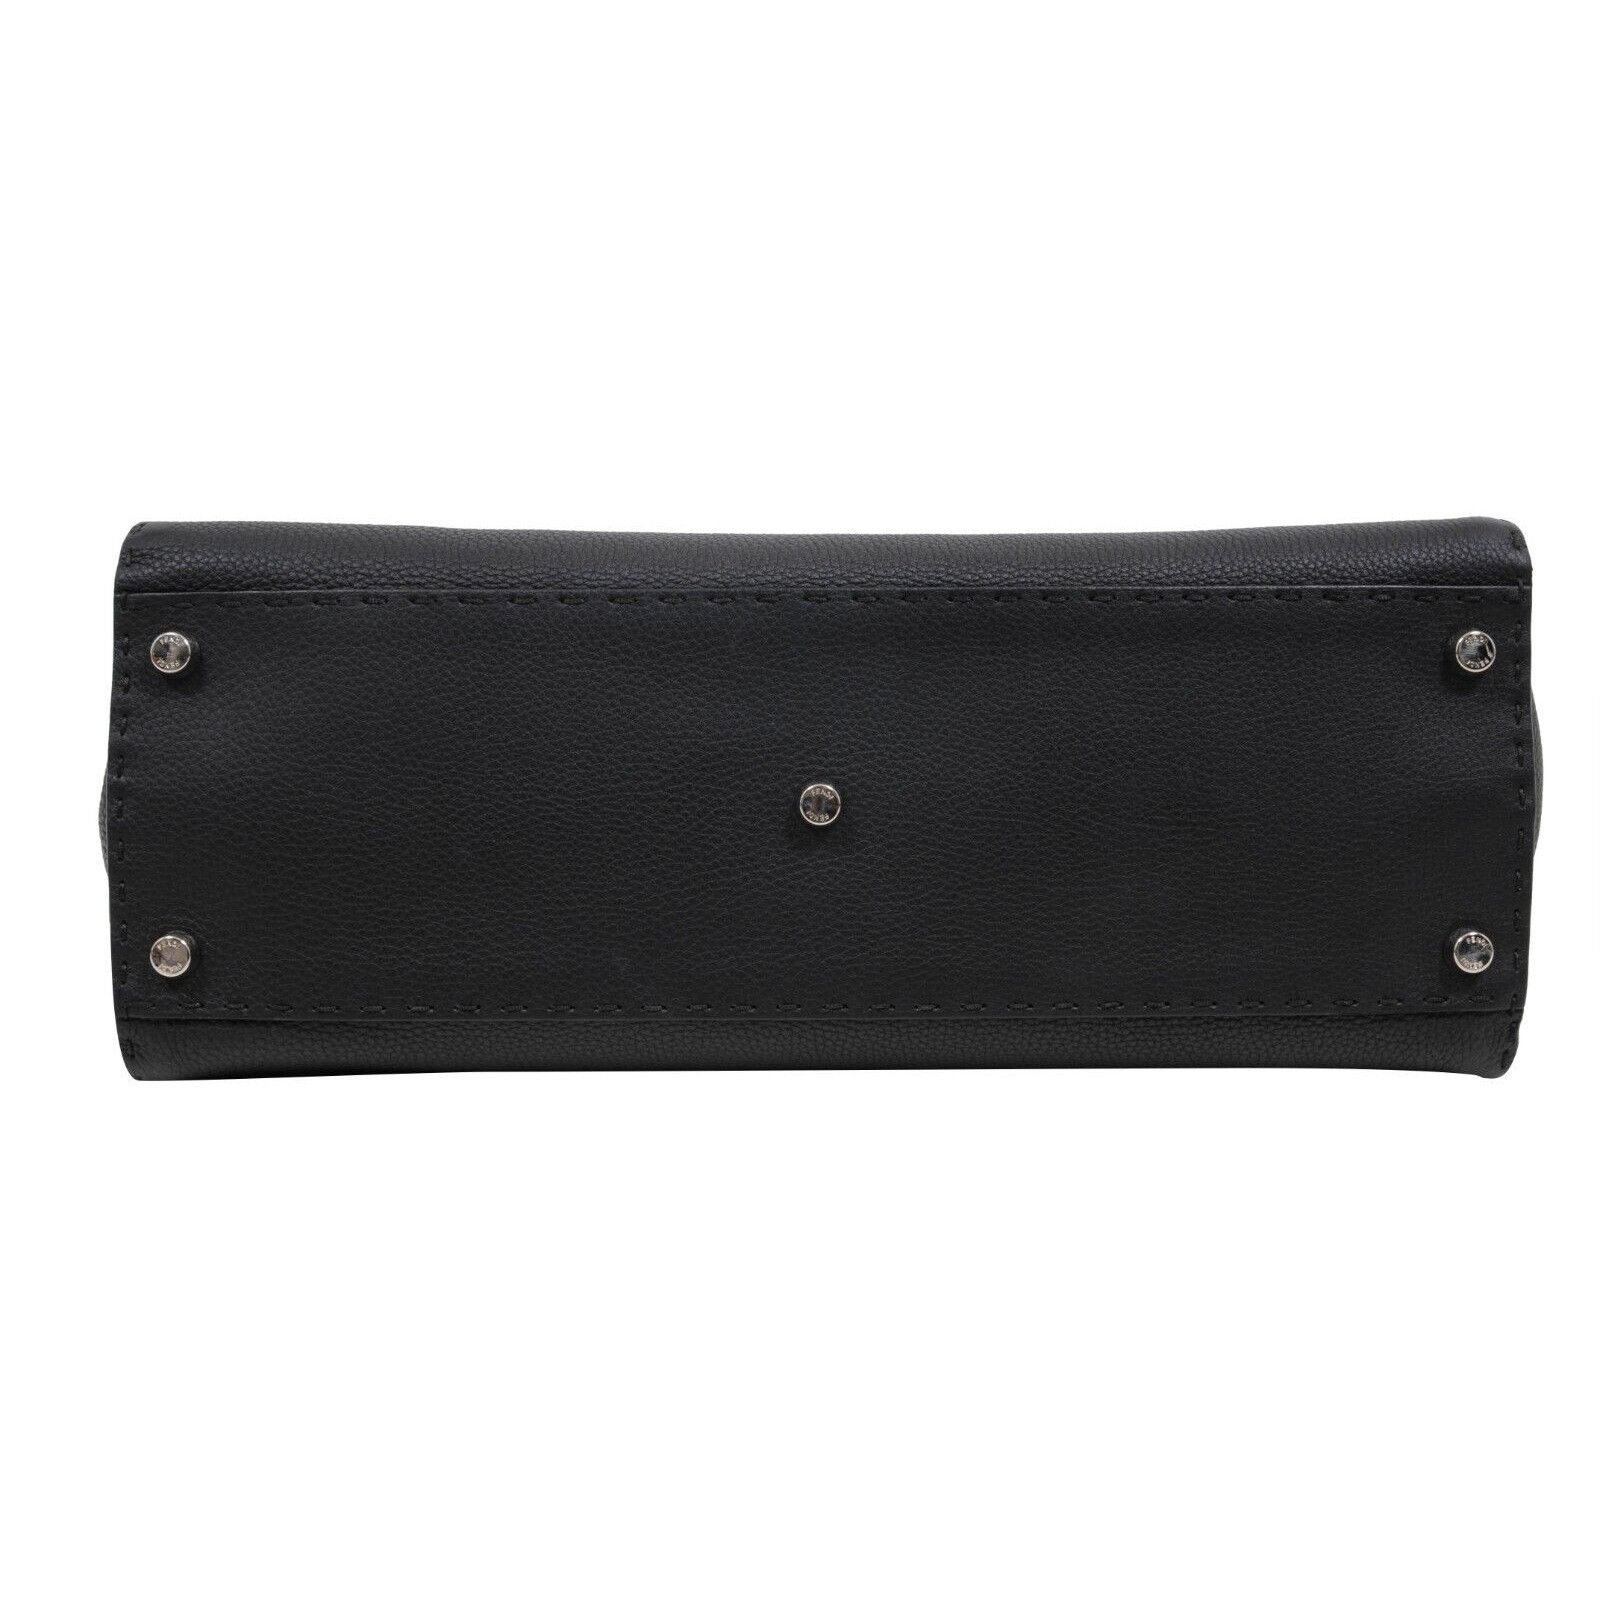 Fendi Peekaboo Satchel Tote Large Black Leather Shoulder Bag Size ONE SIZE - 5 Thumbnail